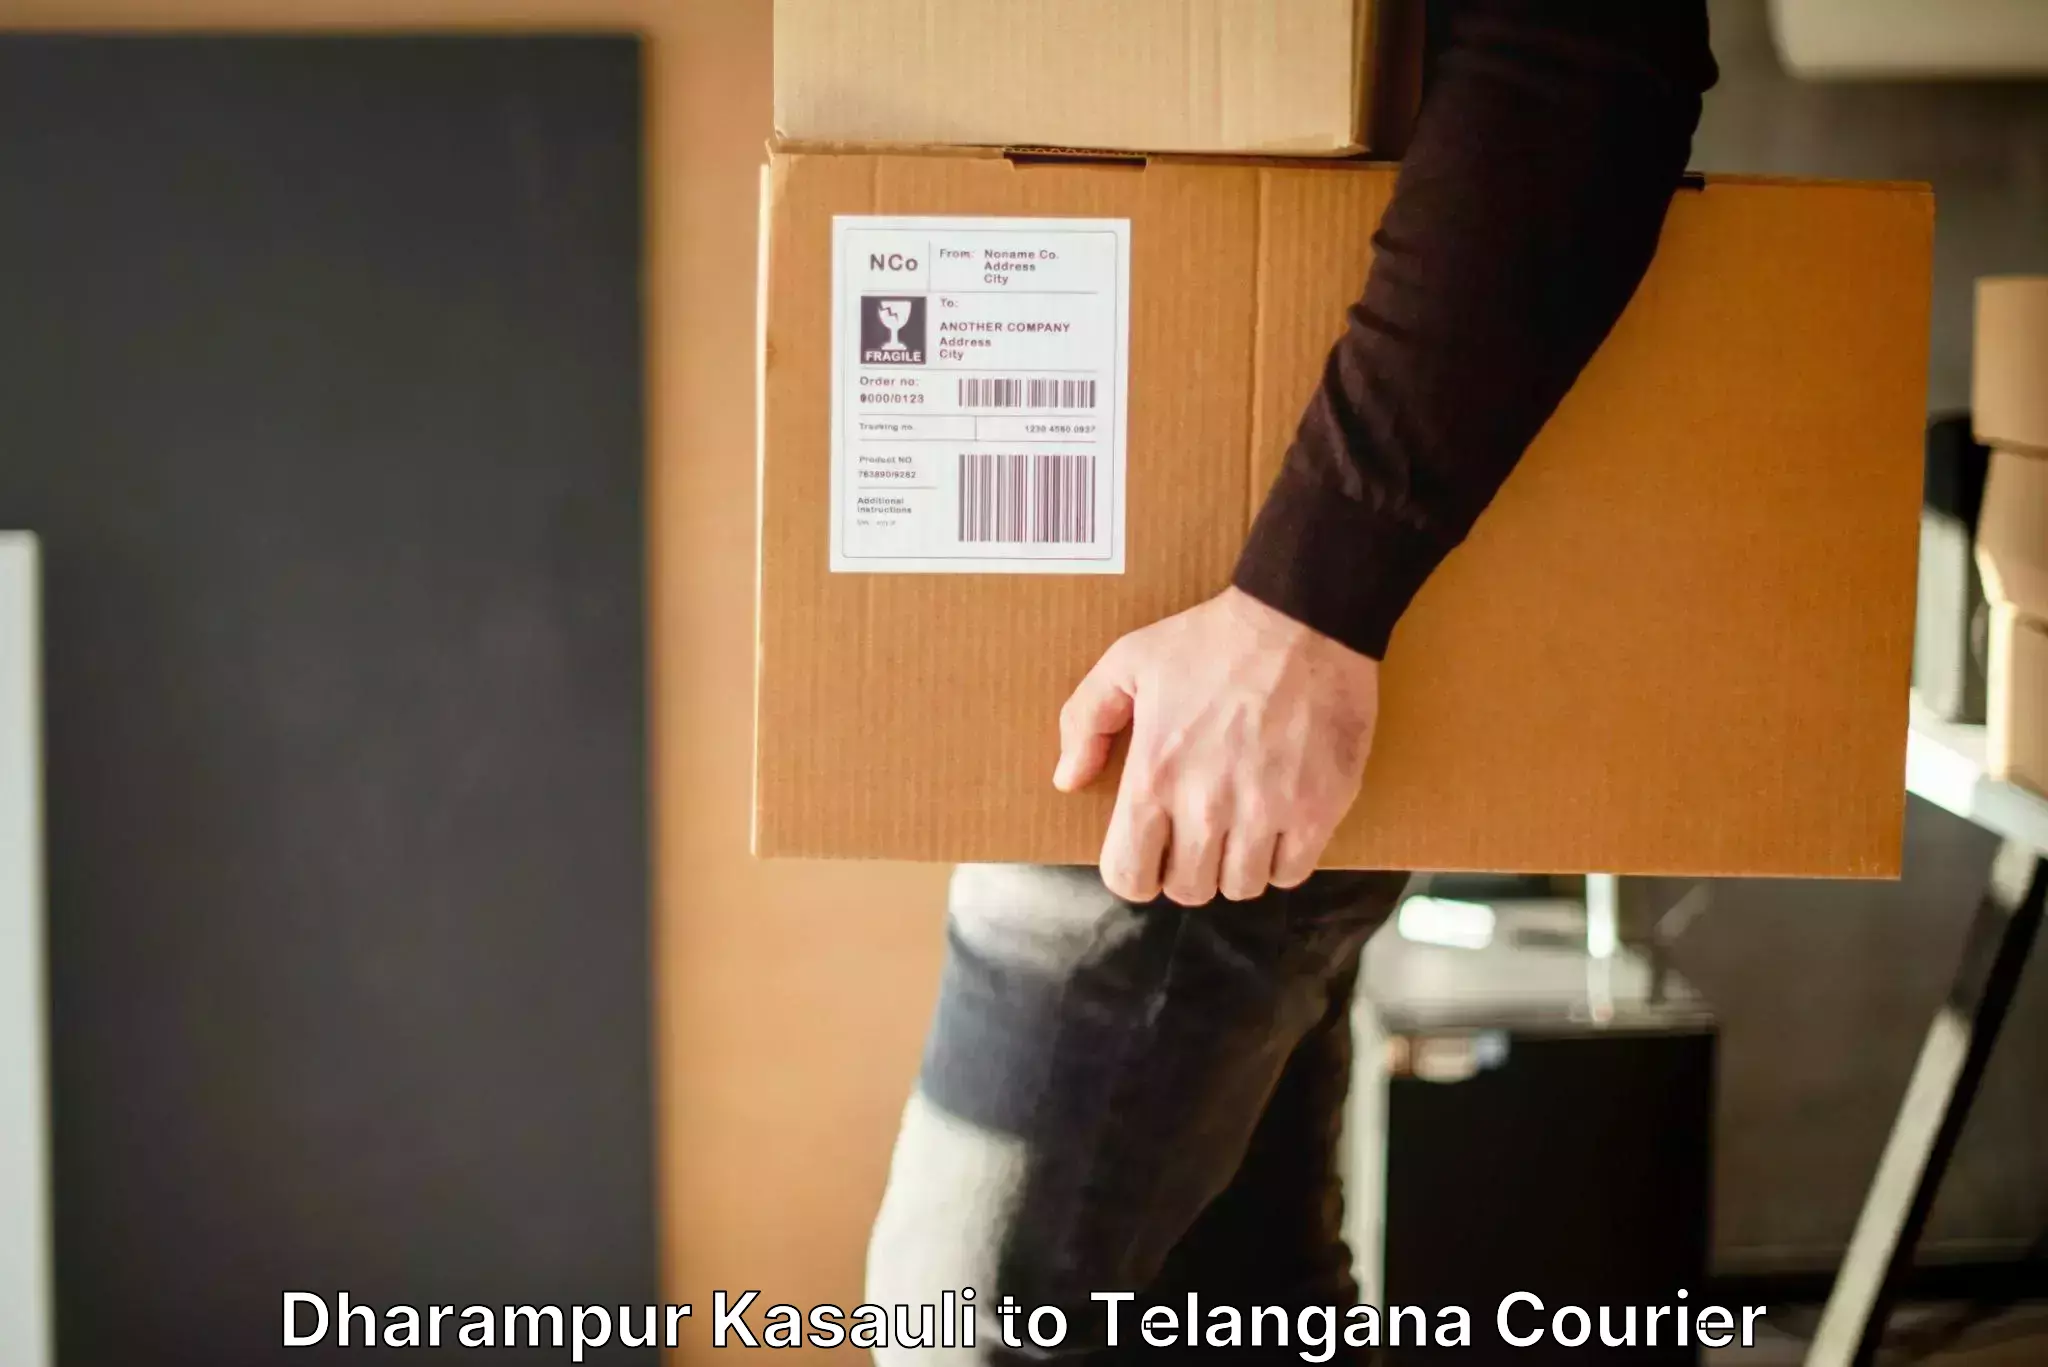 Baggage relocation service Dharampur Kasauli to Telangana